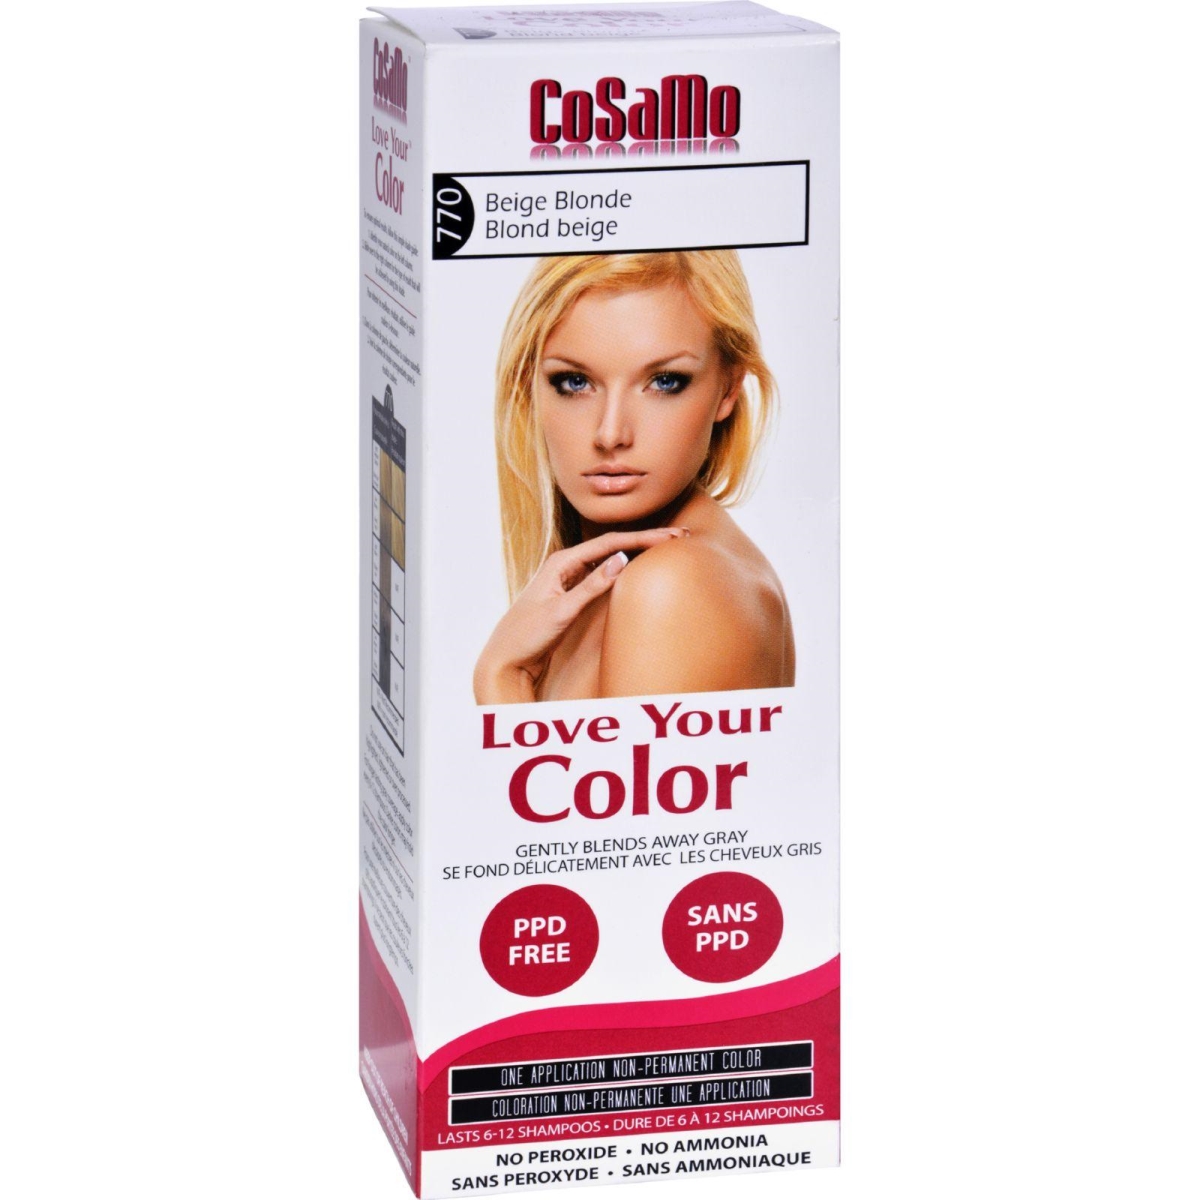 Hg1578004 Hair Color Cosamo Non Permanent, Beige Blonde - 1 Count